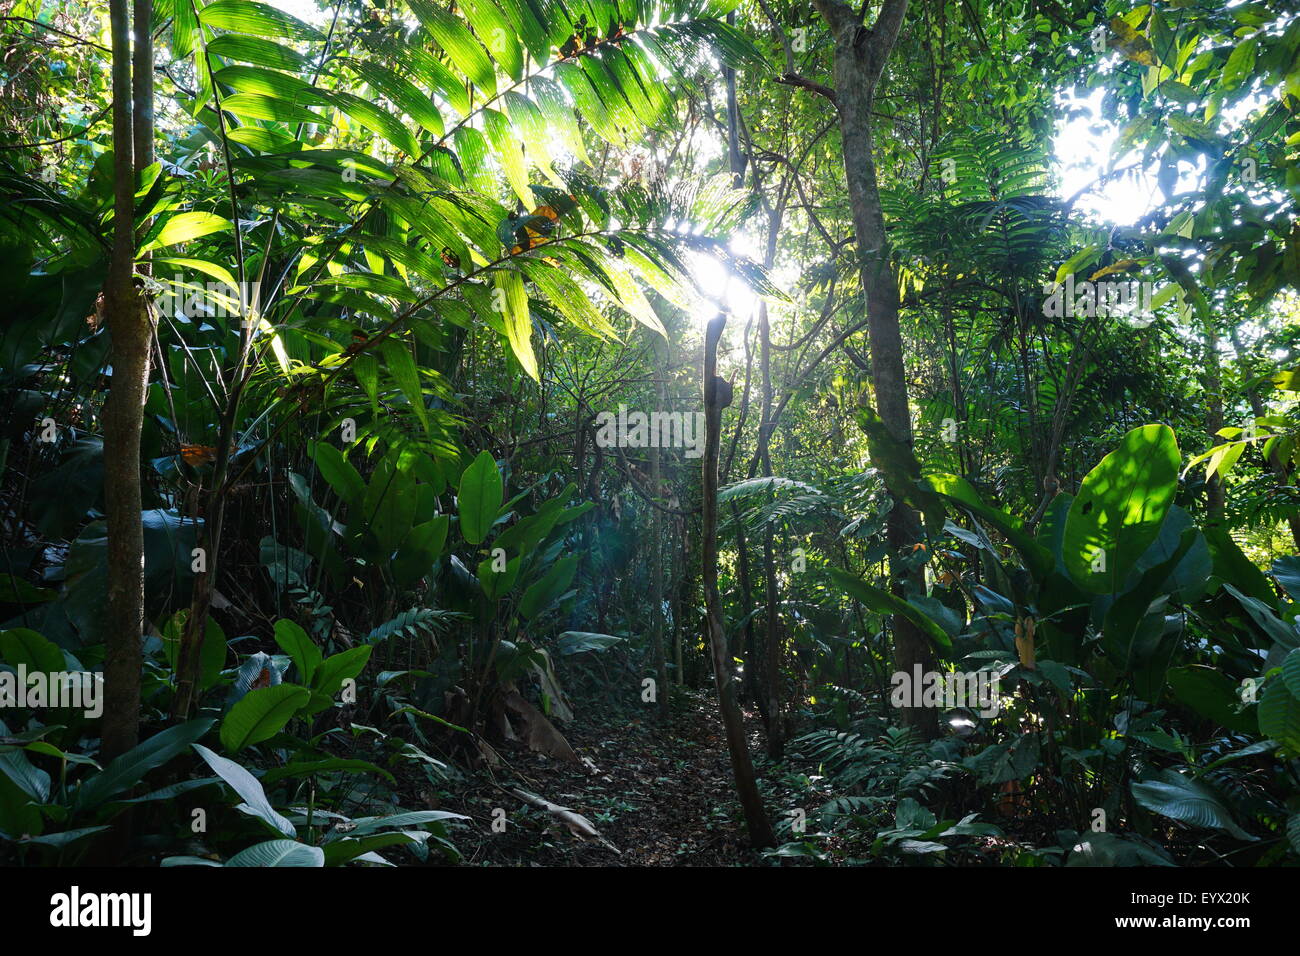 Jungle path through lush vegetation, natural scene, Caribbean side of Costa Rica, Central America Stock Photo